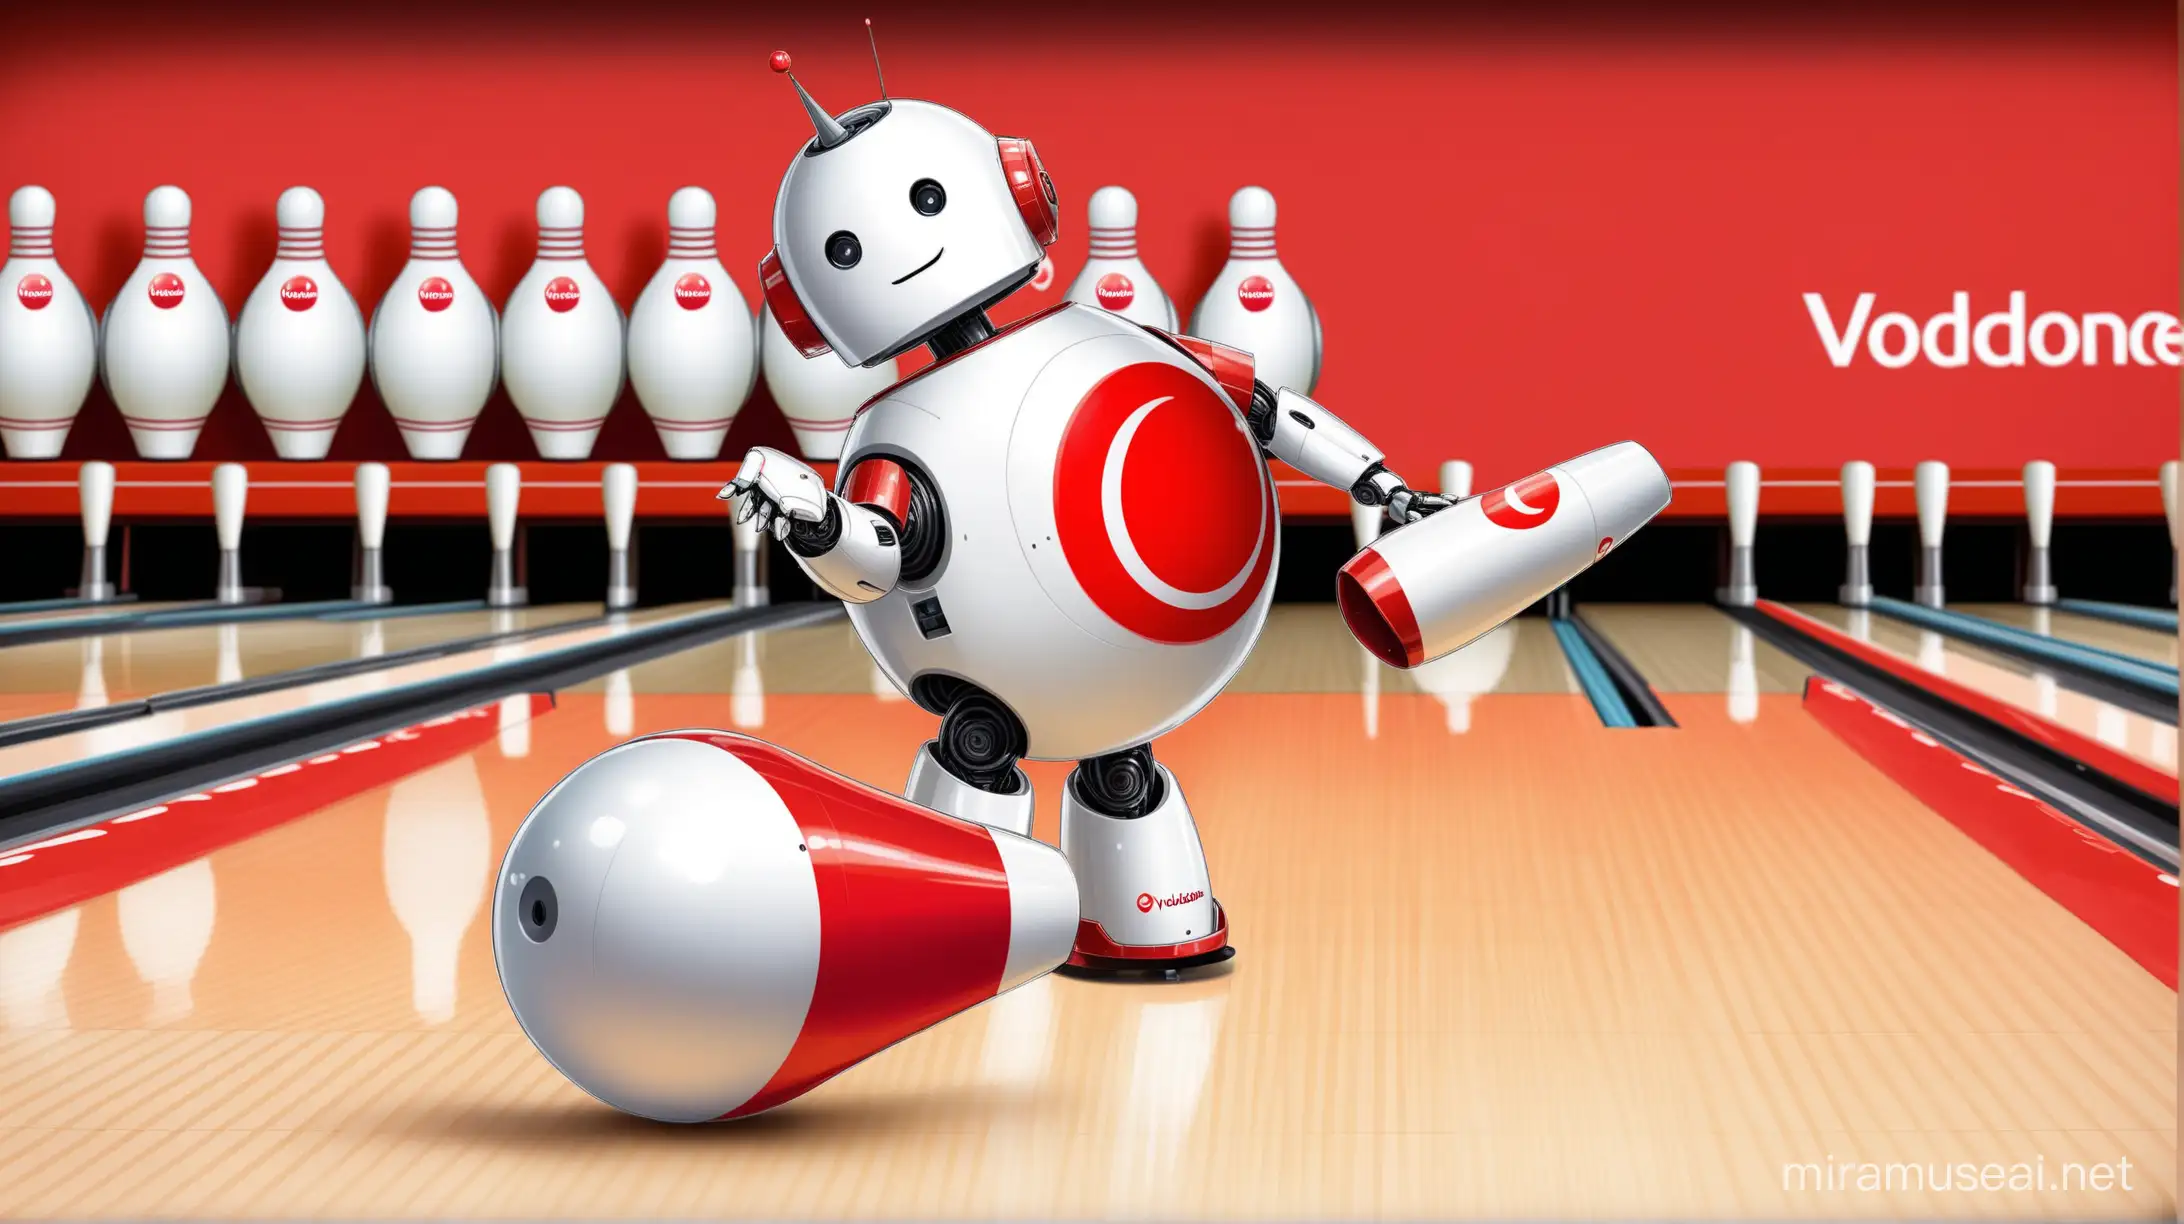 Vodafone Tobi Robot Strikes Bowling Pins with Celebratory Dance